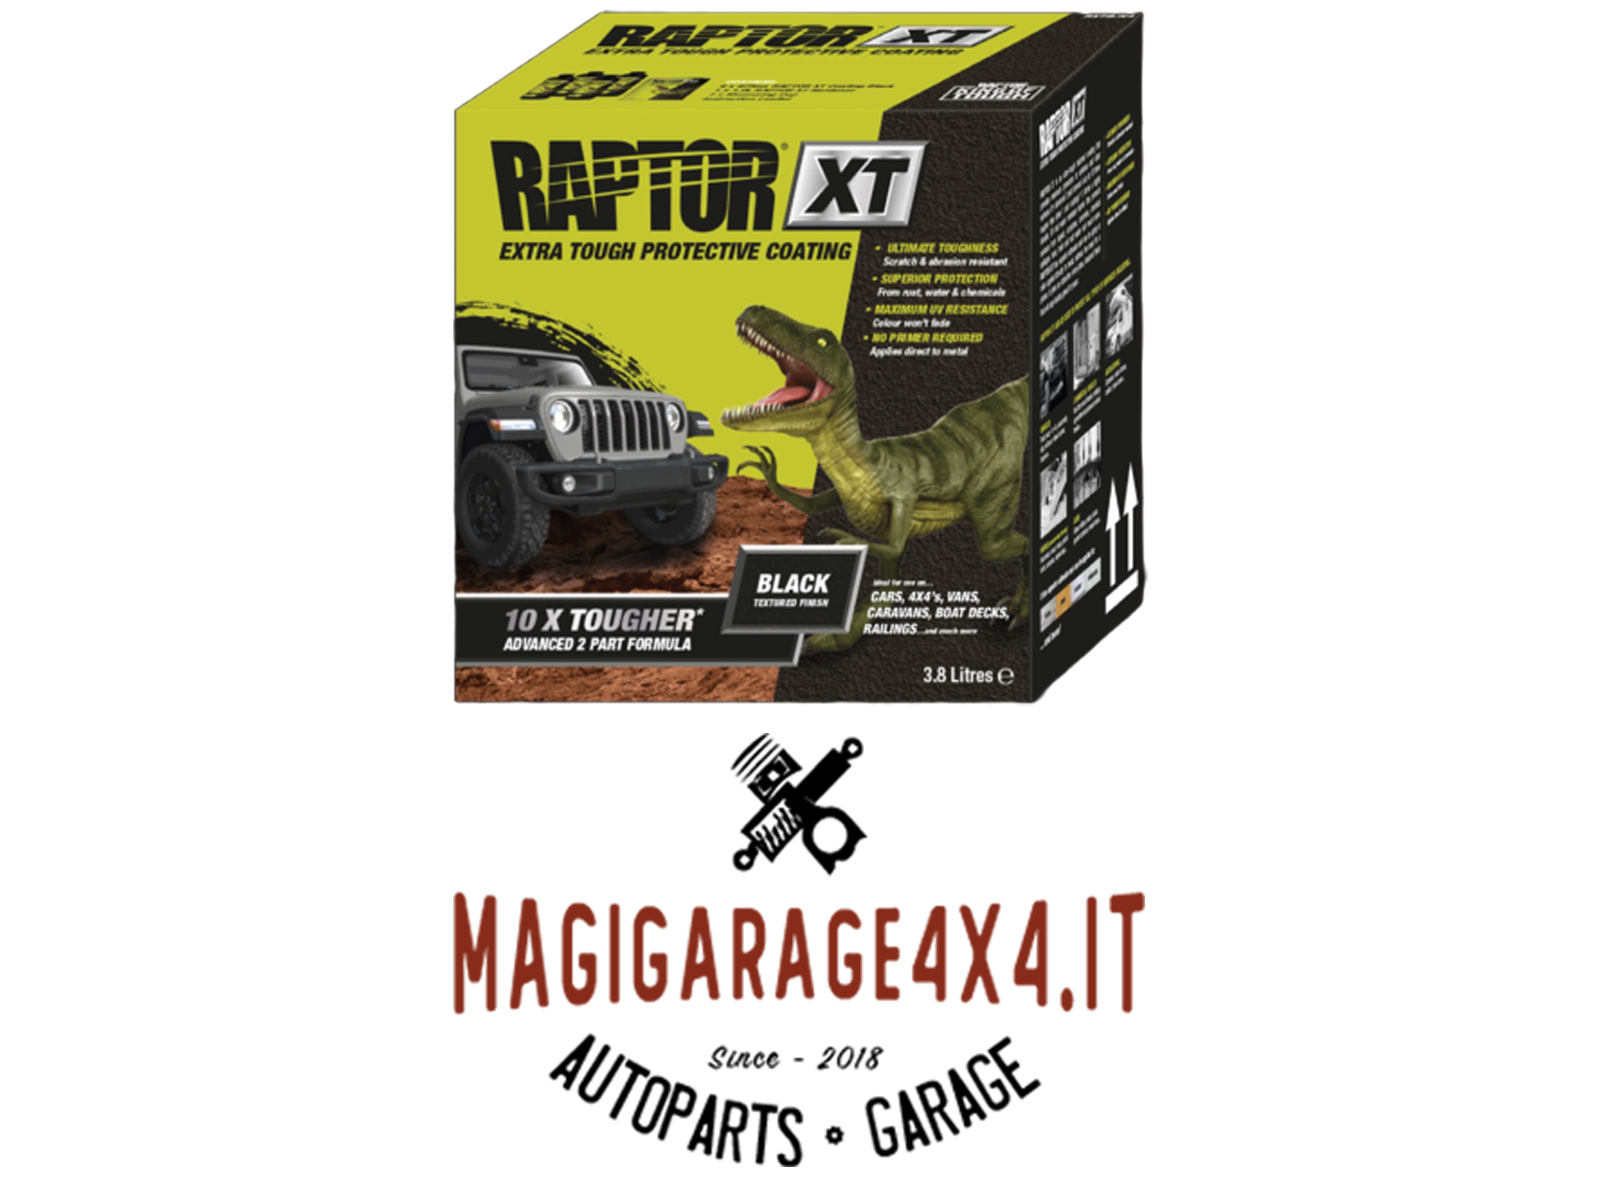 Kit vernice Upol Raptor XT 10 x - Magigarage 4x4